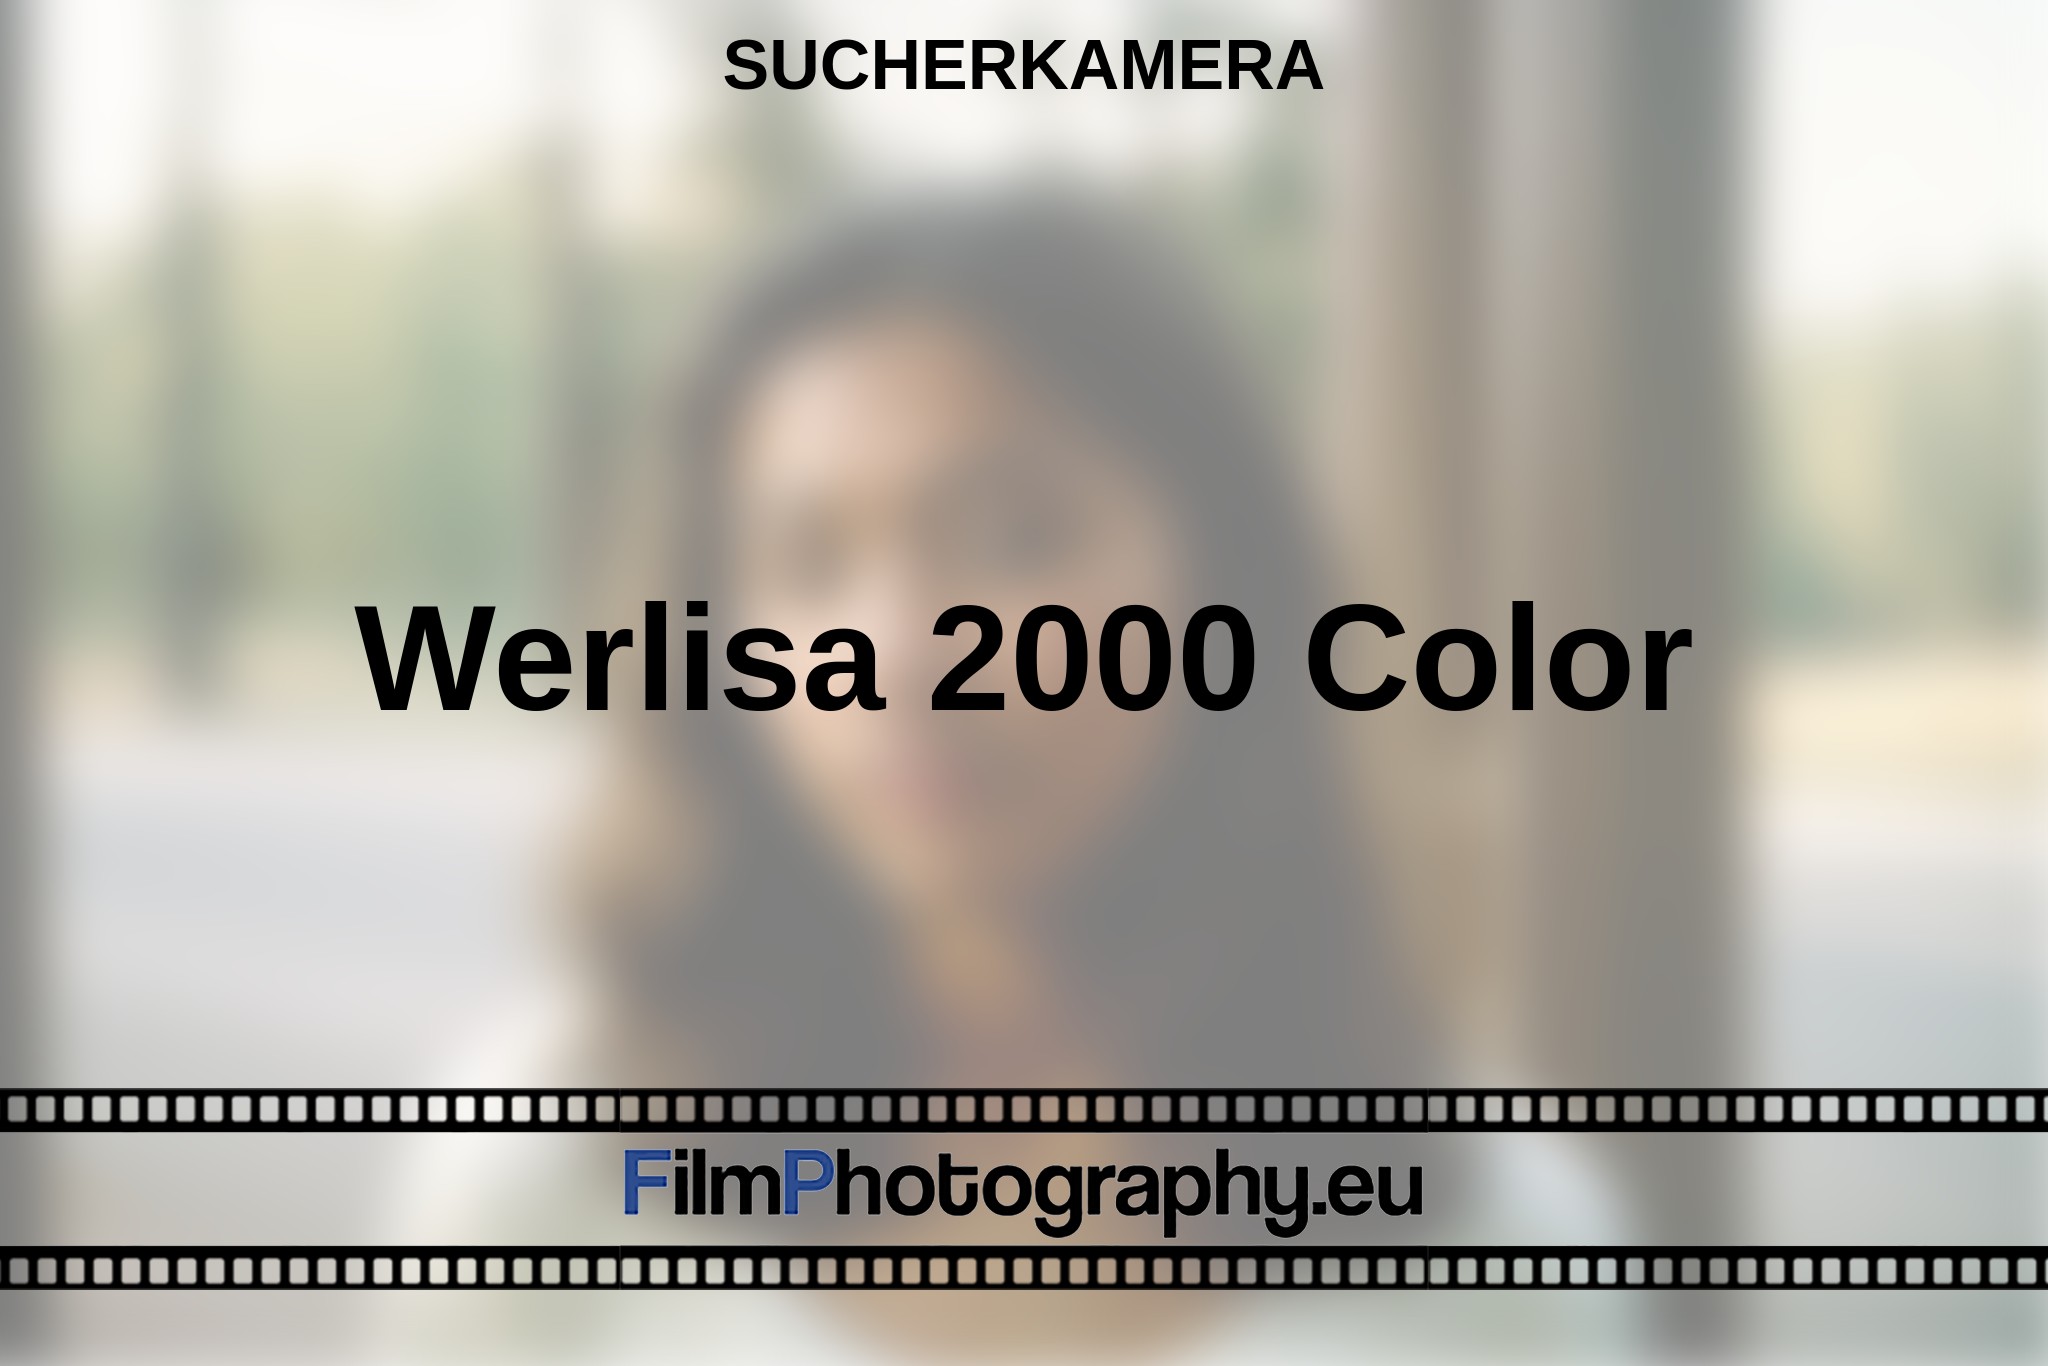 werlisa-2000-color-sucherkamera-bnv.jpg